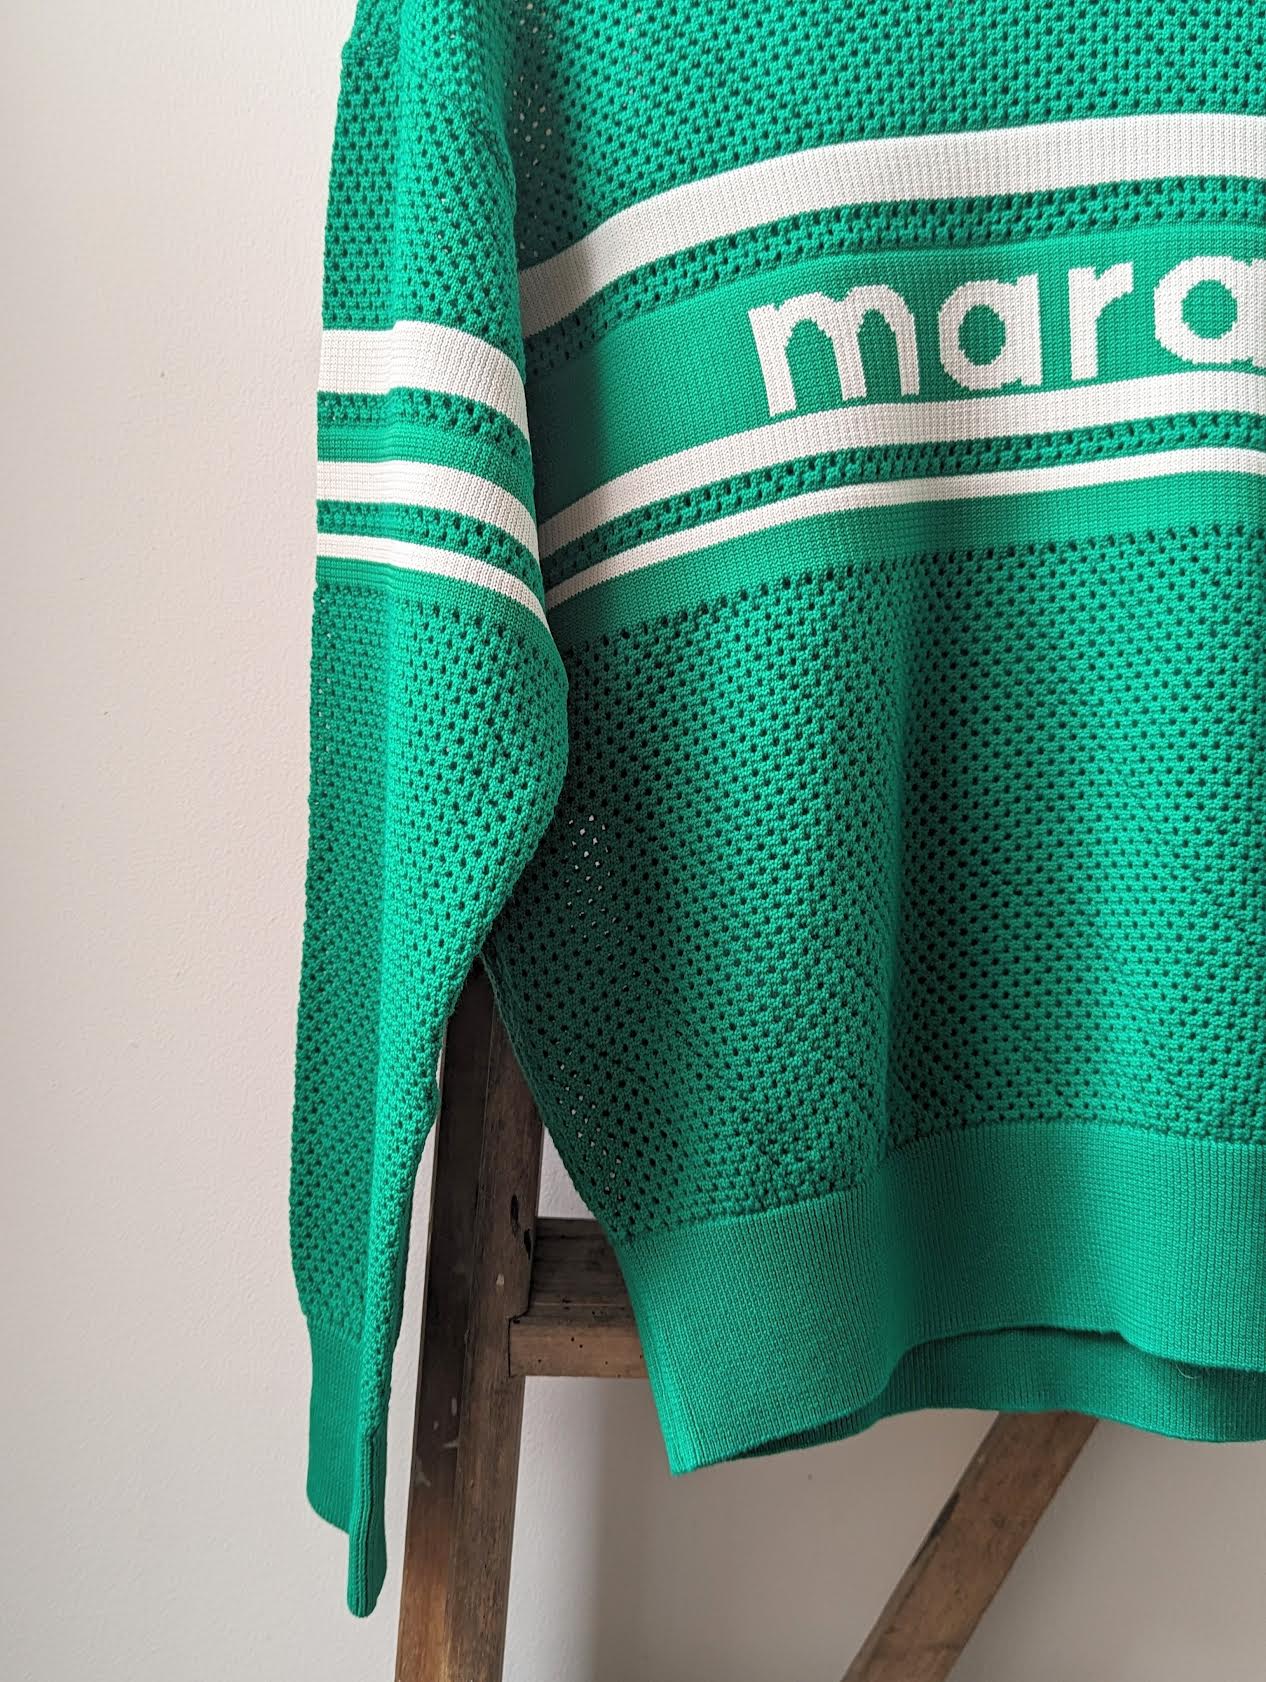 Marant Étoile - Arwen Emerald Open-Knit Sweatshirt